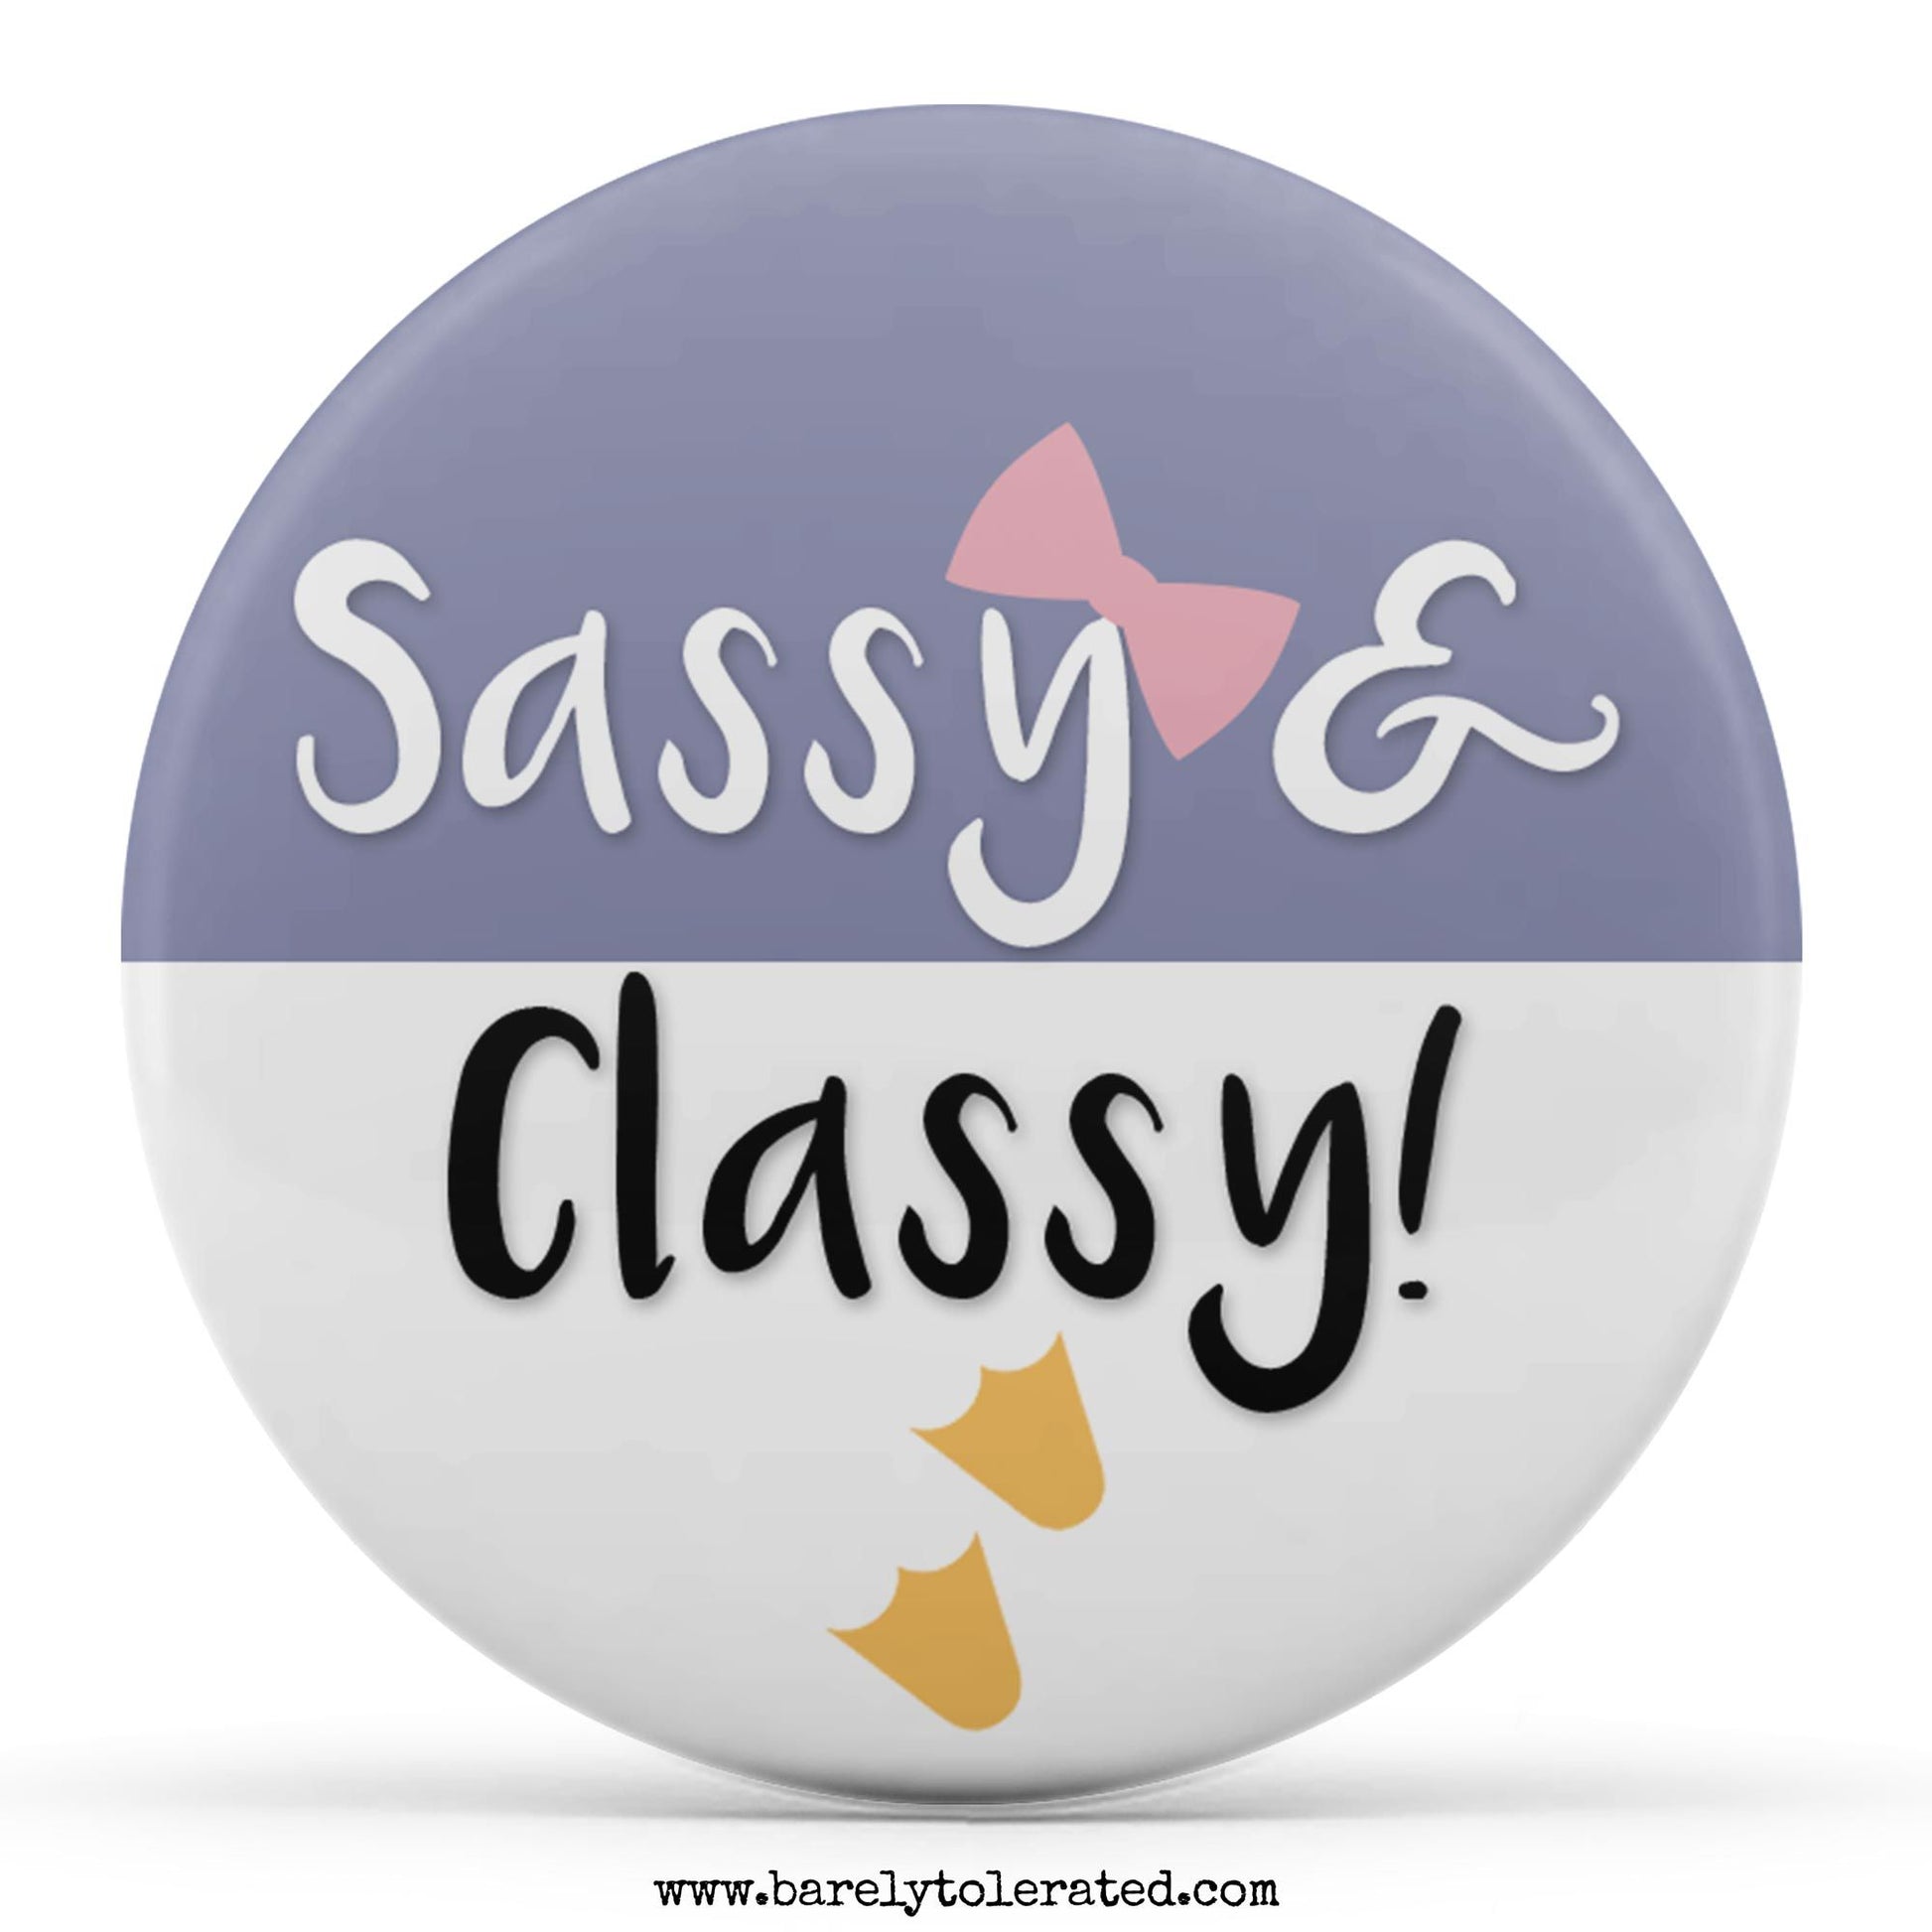 Sassy & Classy Image